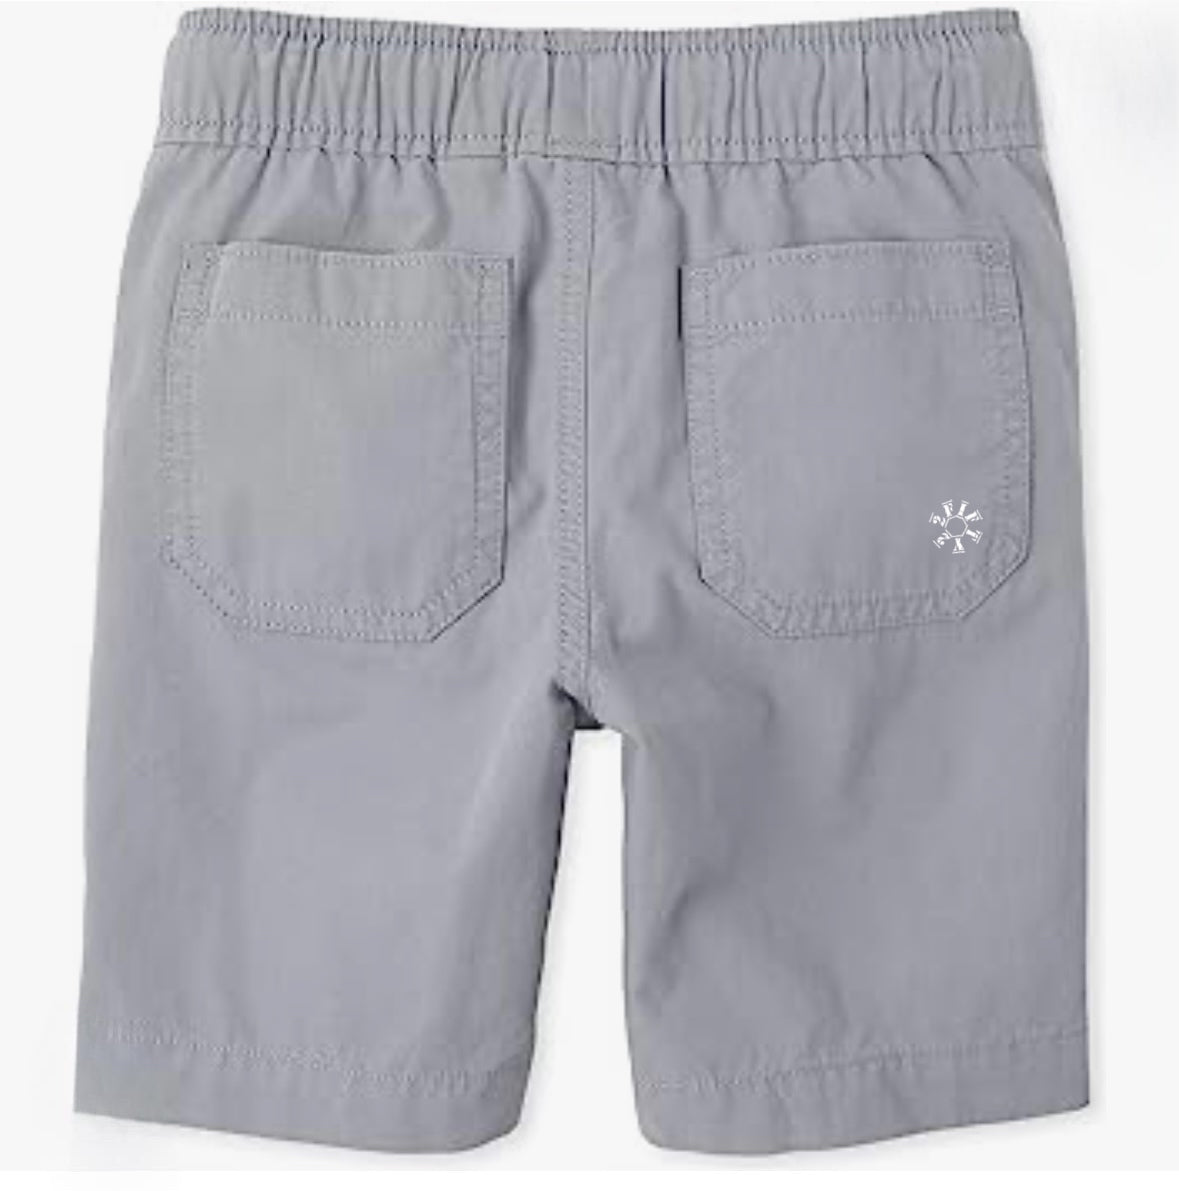 Boys shorts with drawstring